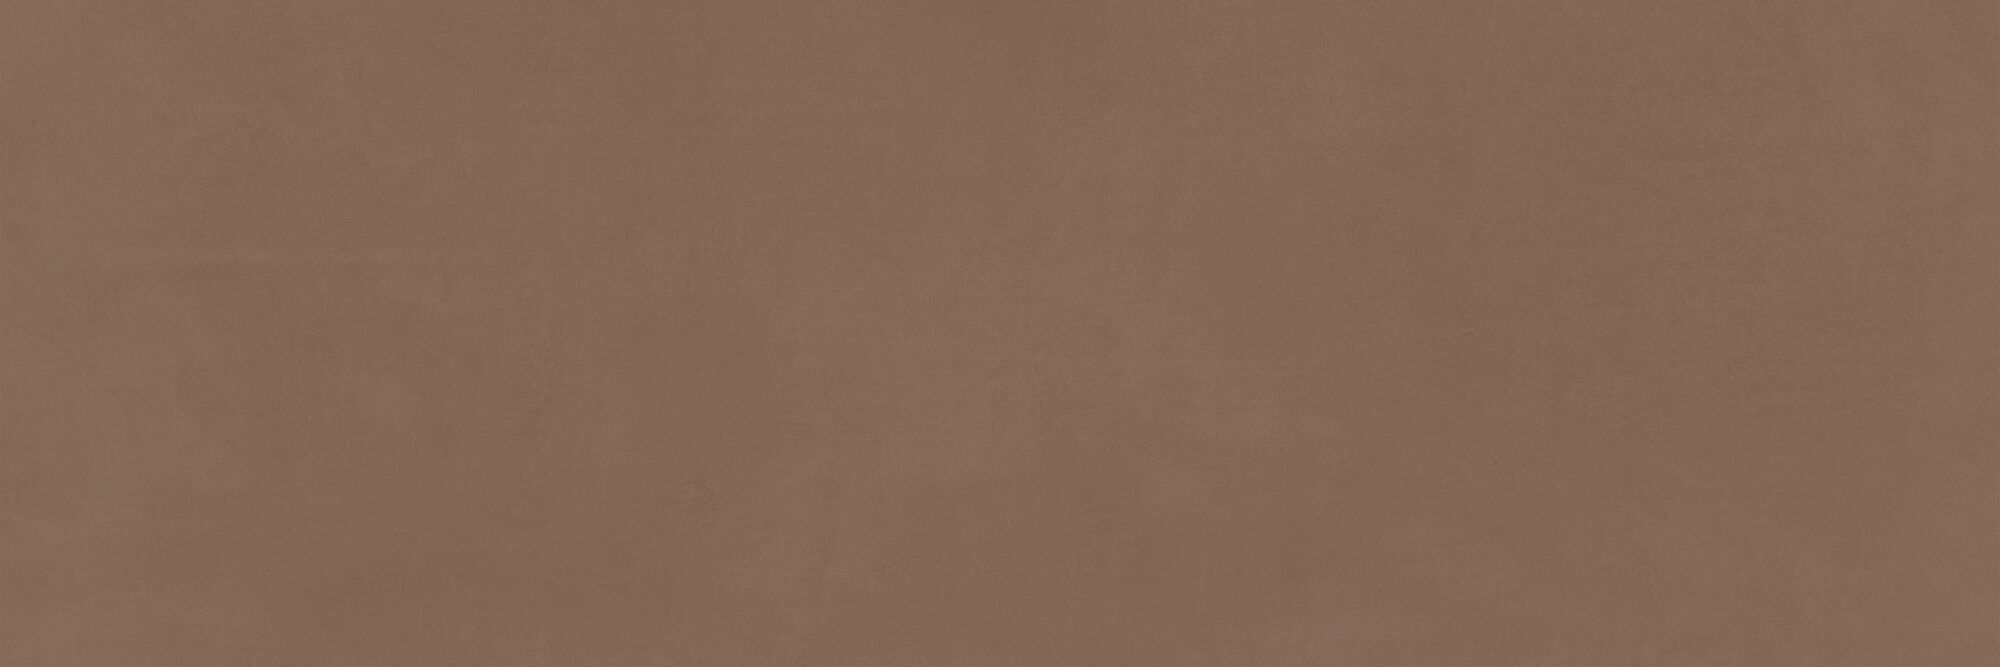 Плитка Meissen Keramik Fragmenti коричневый 25x75 A16500 1